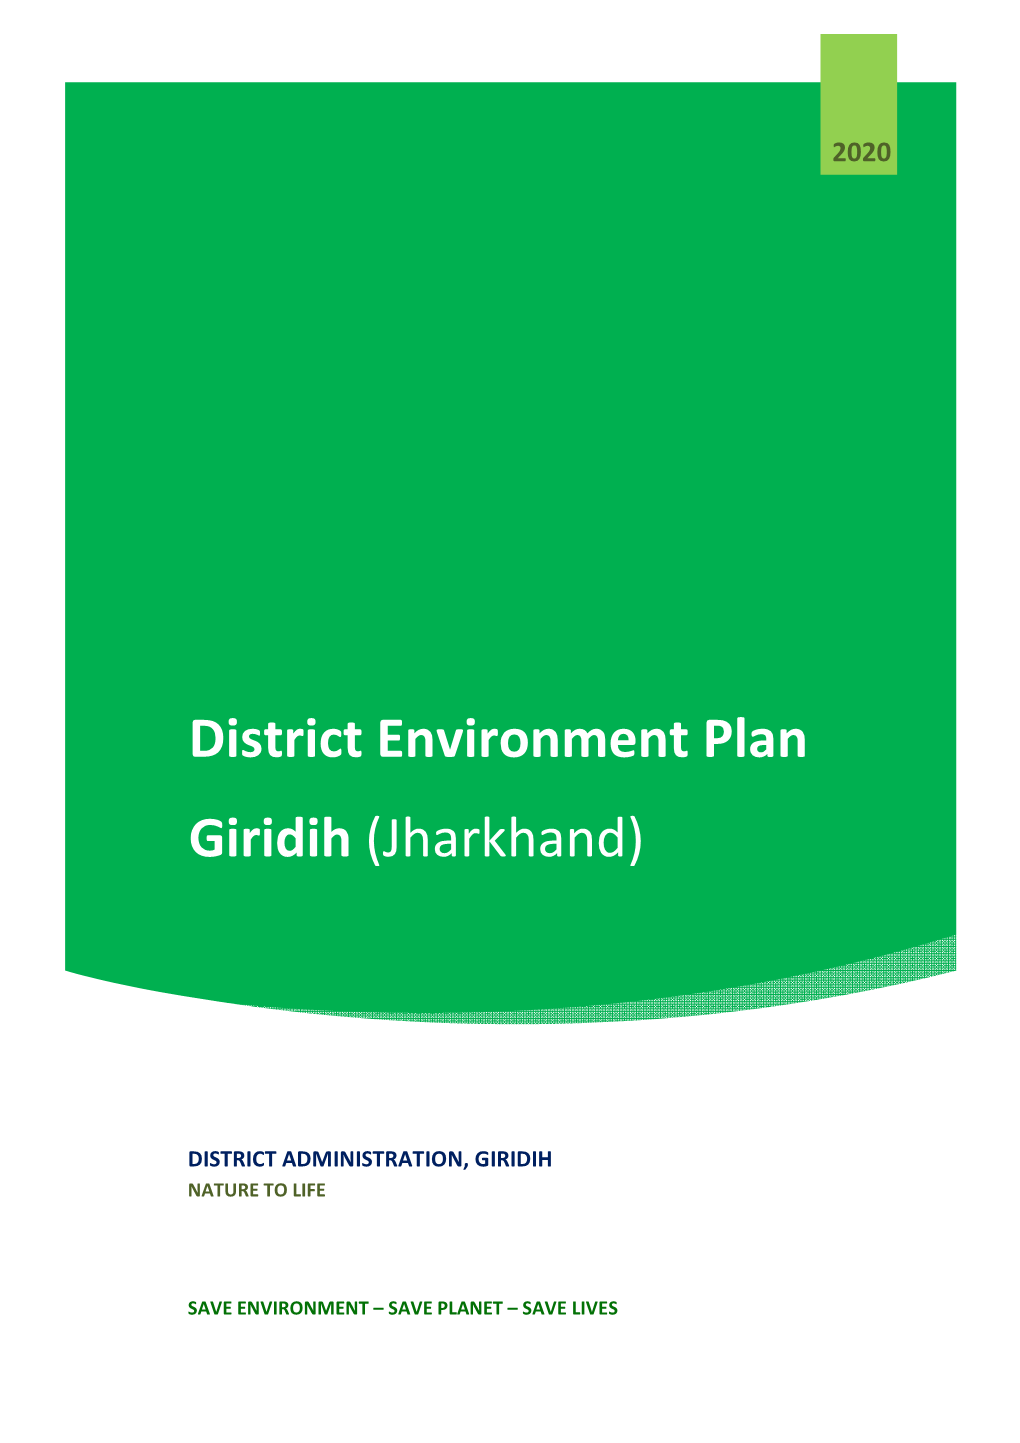 District Environment Plan Giridih (Jharkhand)